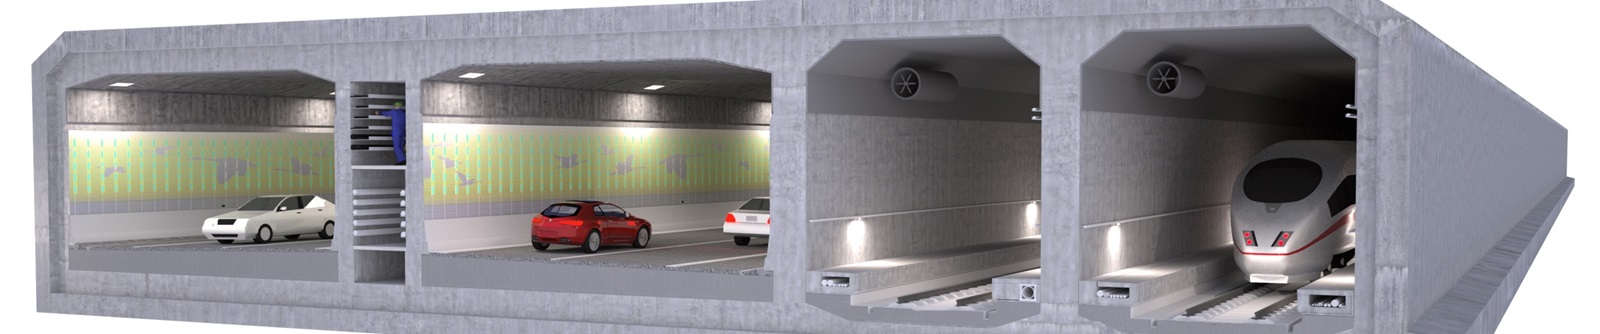 Fehmarnbelt tunnel (source: The Construction Index)